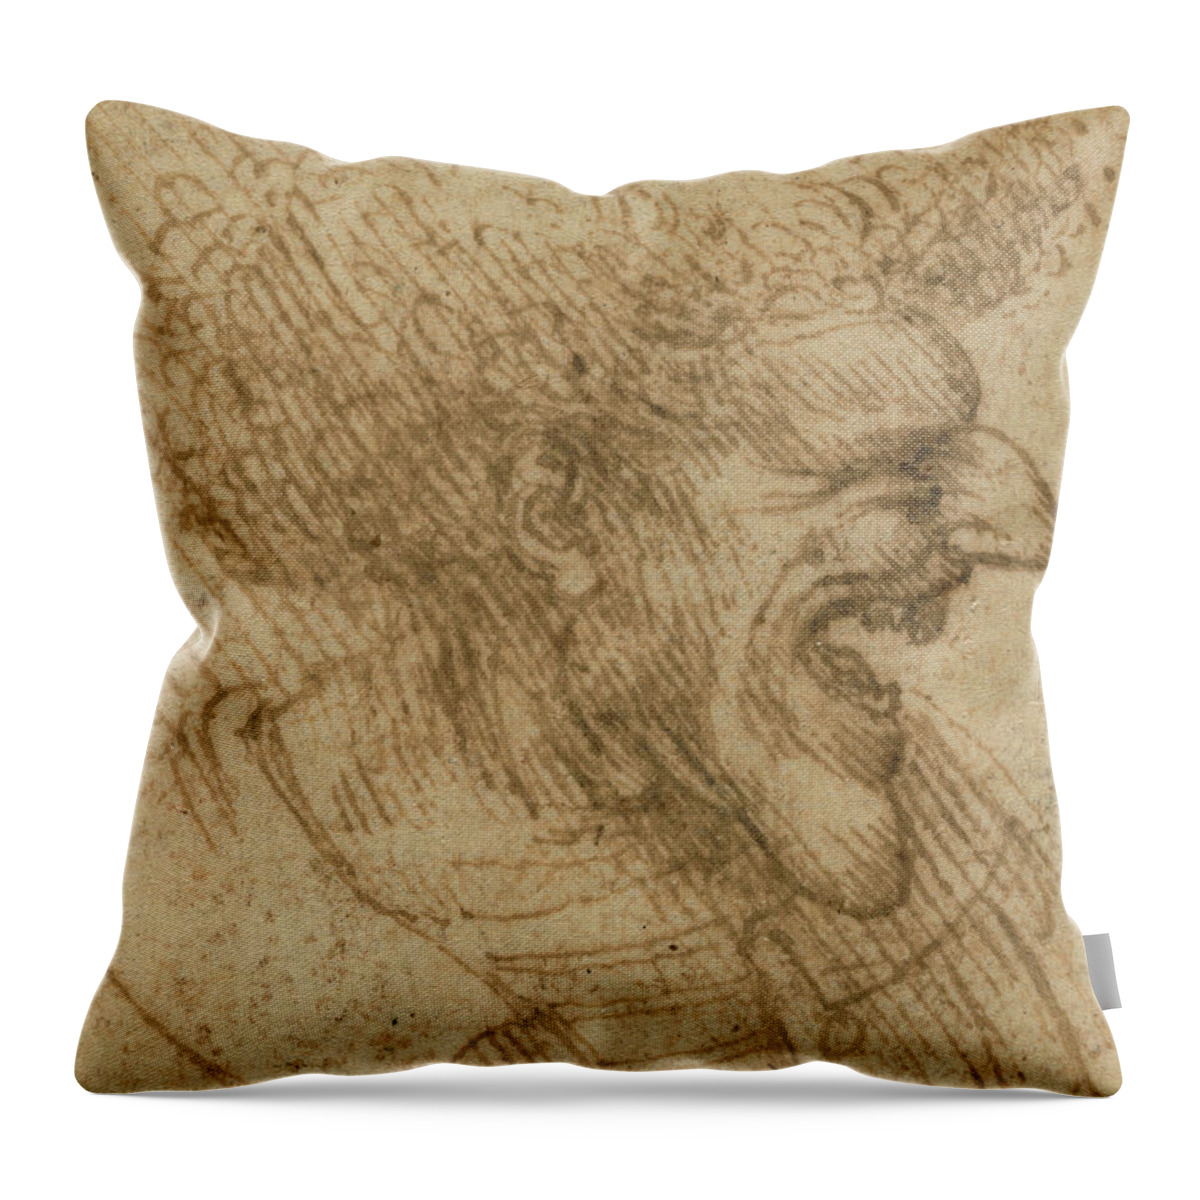 Leonardo Da Vinci Throw Pillow featuring the drawing Caricature of a Man with Bushy Hair by Leonardo Da Vinci